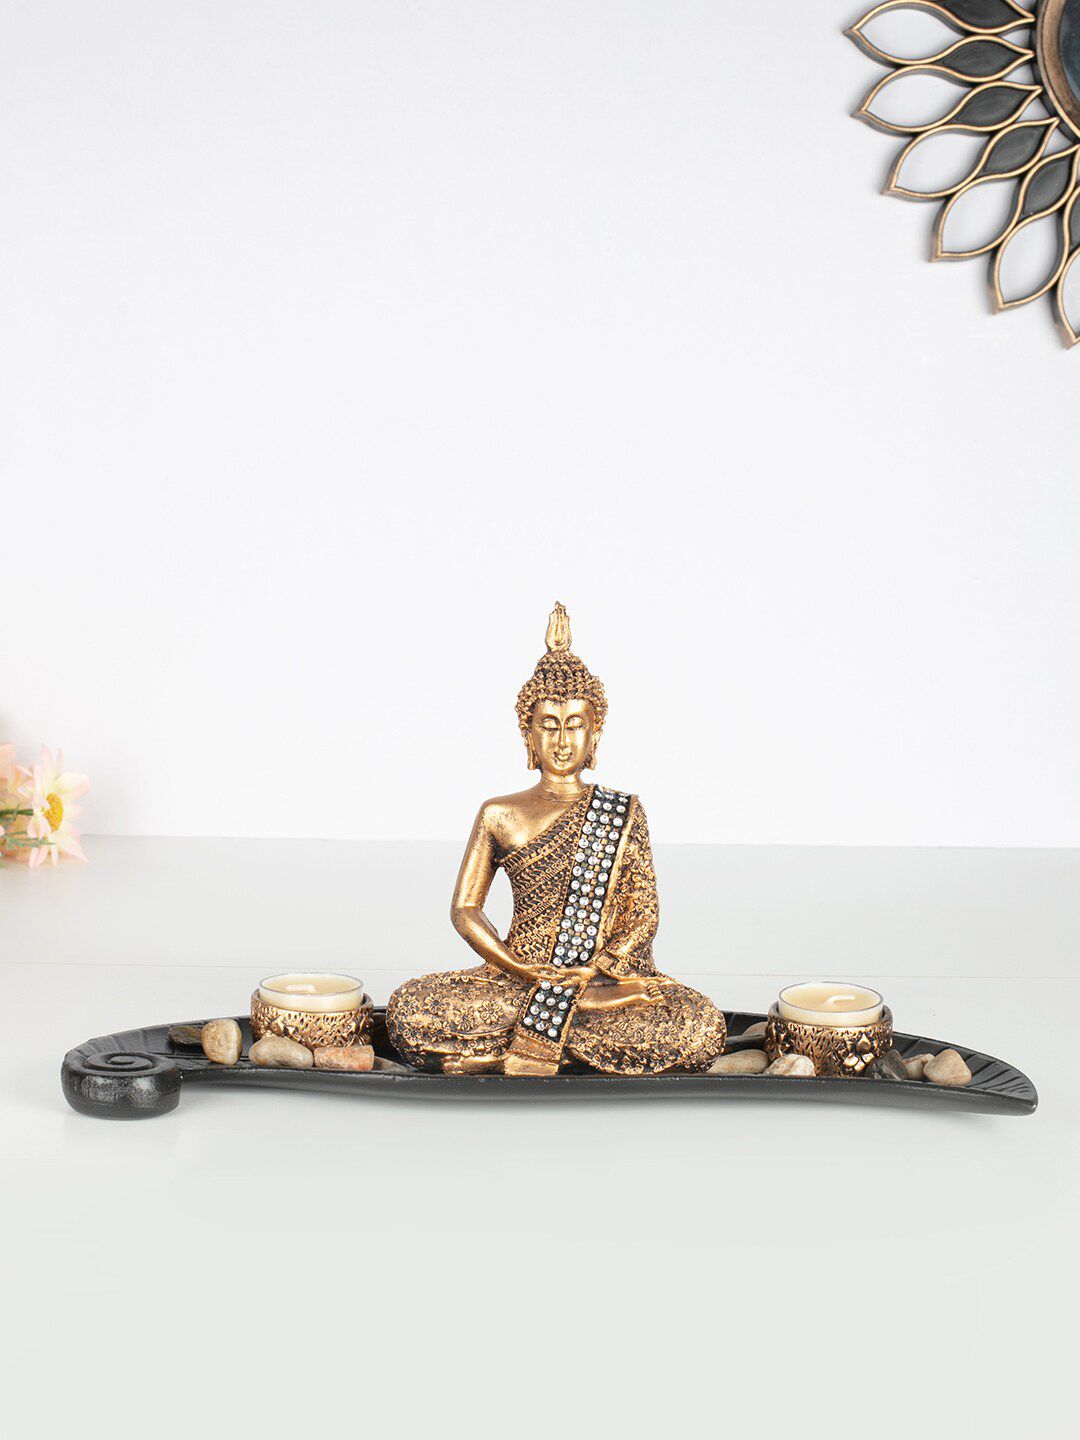 HomeTown Gold-Toned Buddha Figurine Cum T-Light Holder Showpiece Price in India